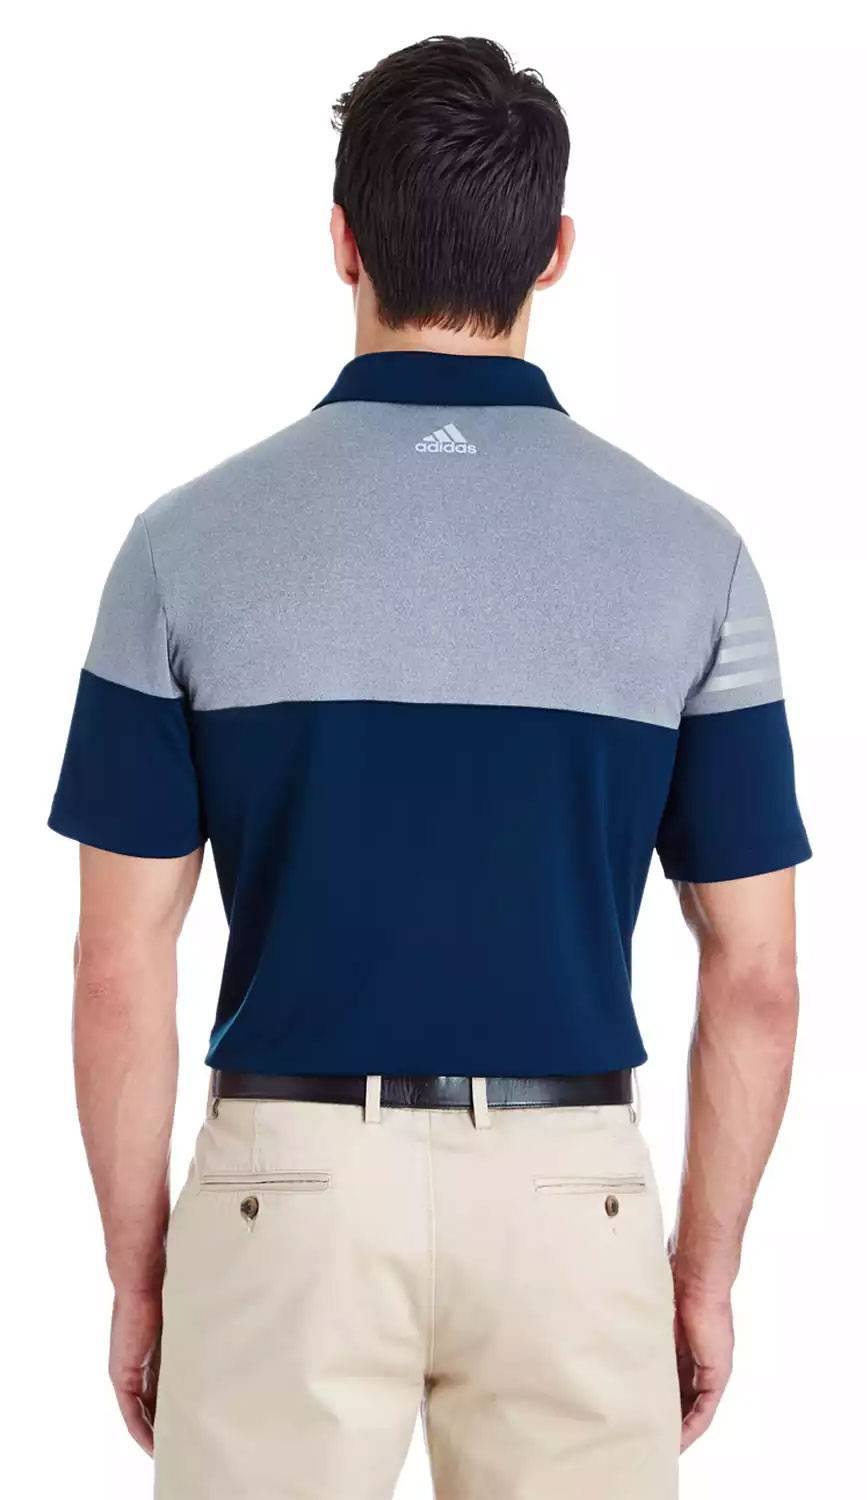 Adidas Golf Shirt Size Chart